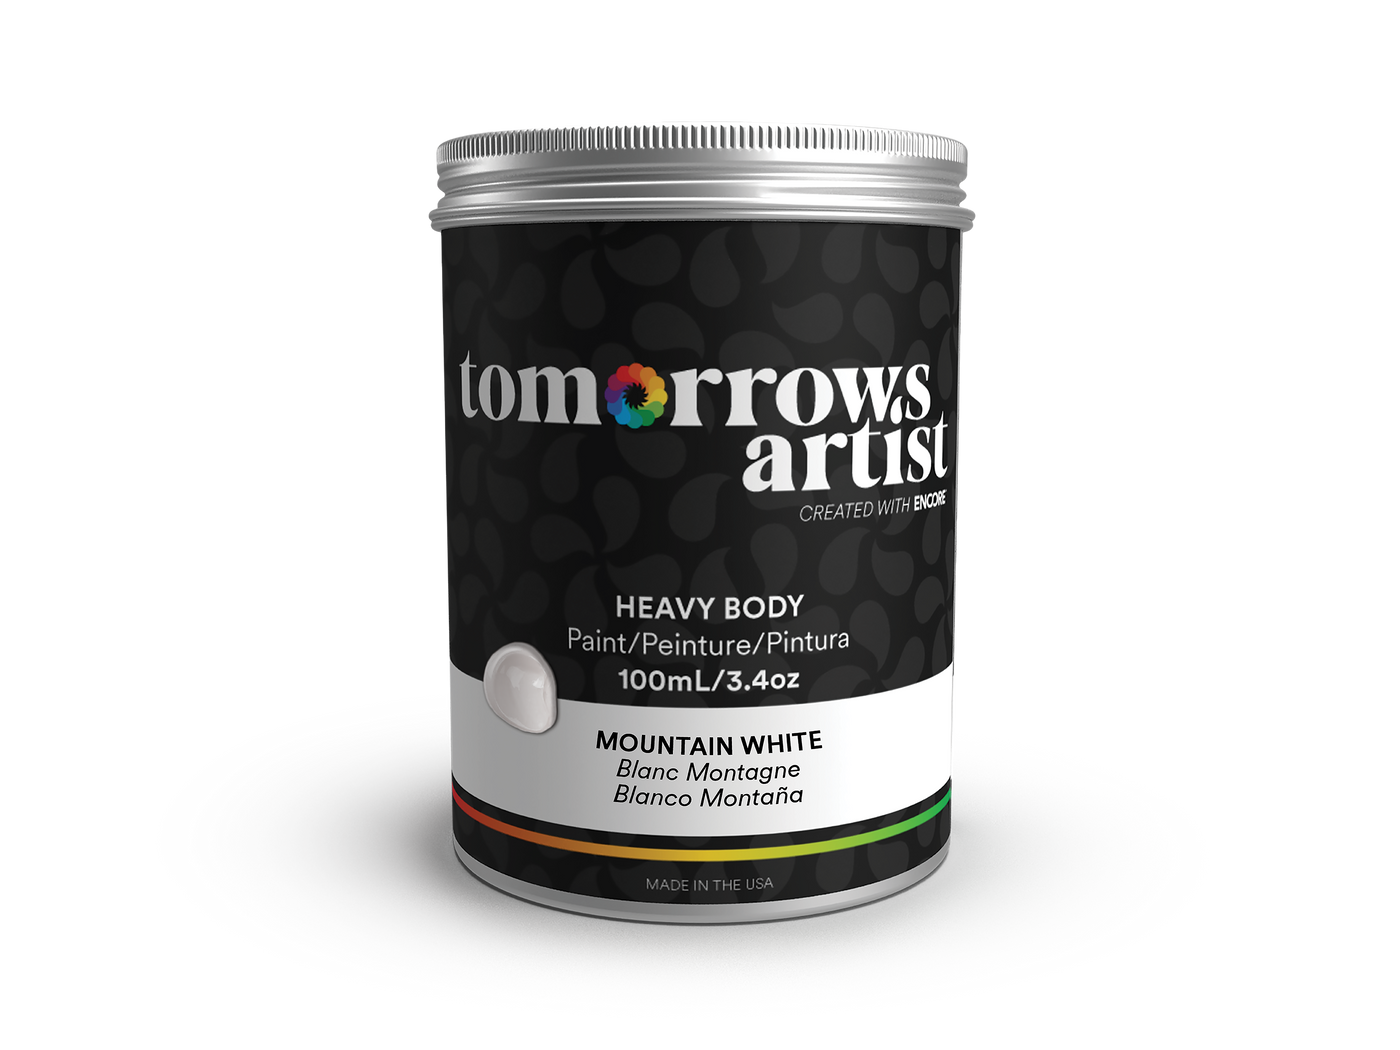 Tomorrows Artist: Heavy Body Eco-Friendly Acrylic Art Paint 100ml/3.38oz Jar